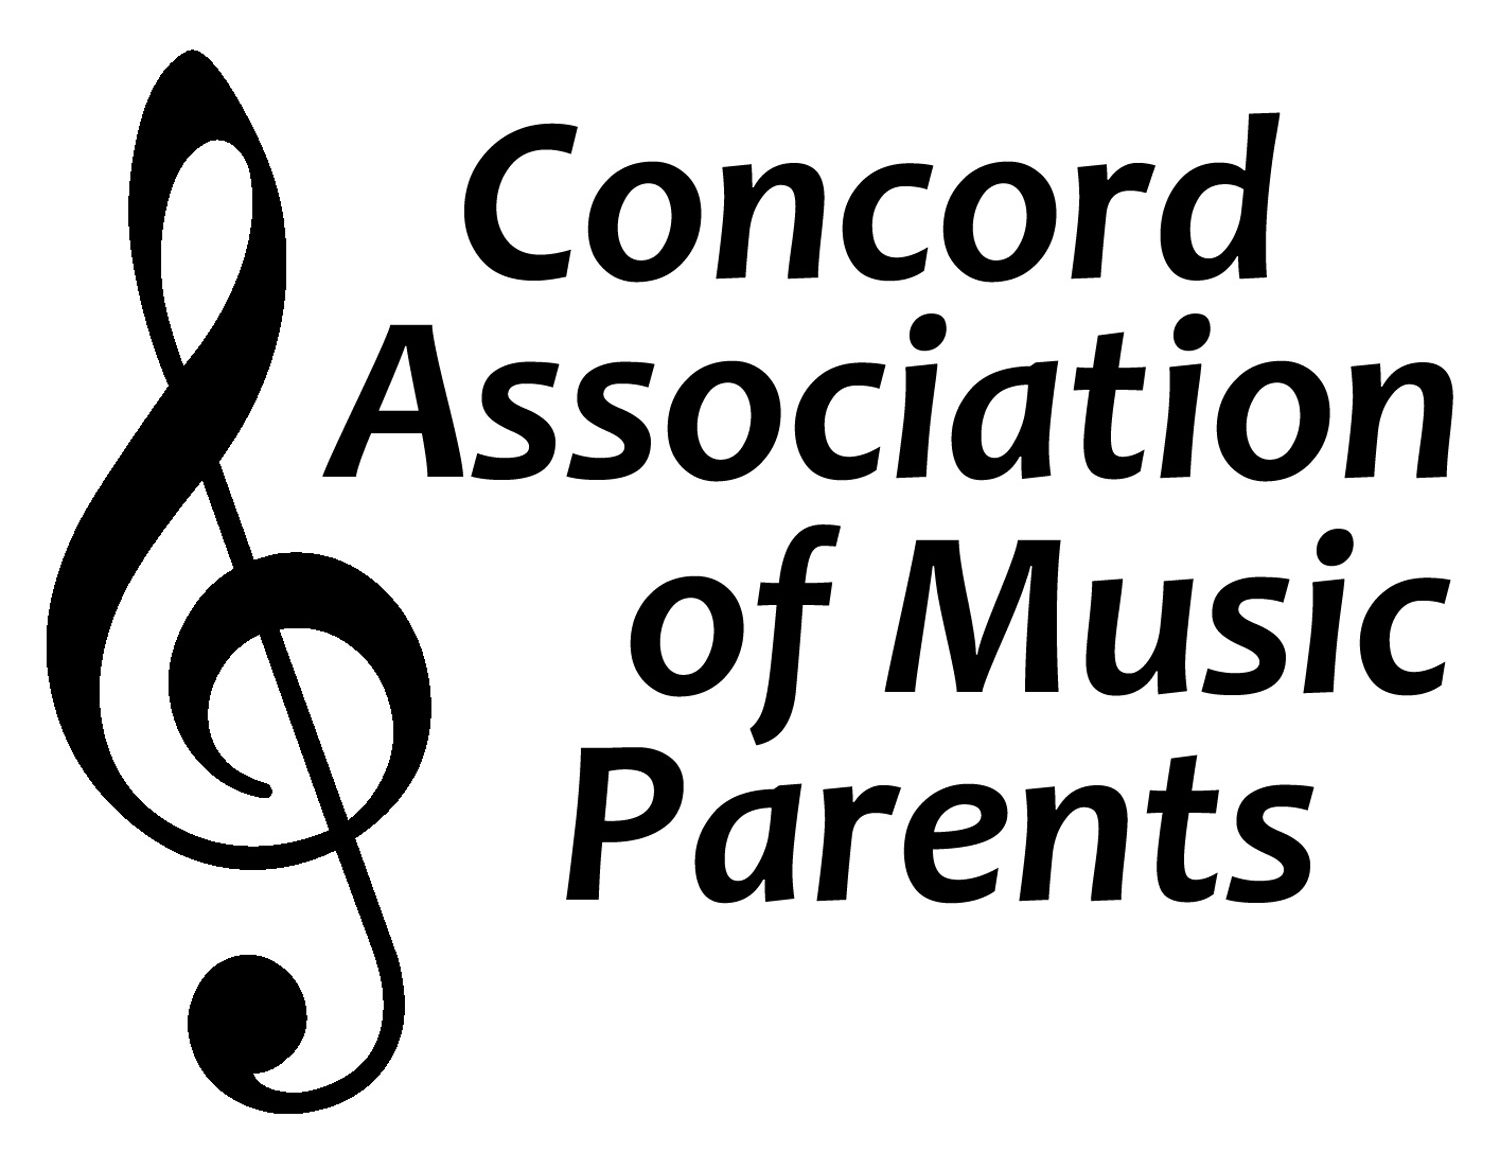 Concord Association of Music Parents